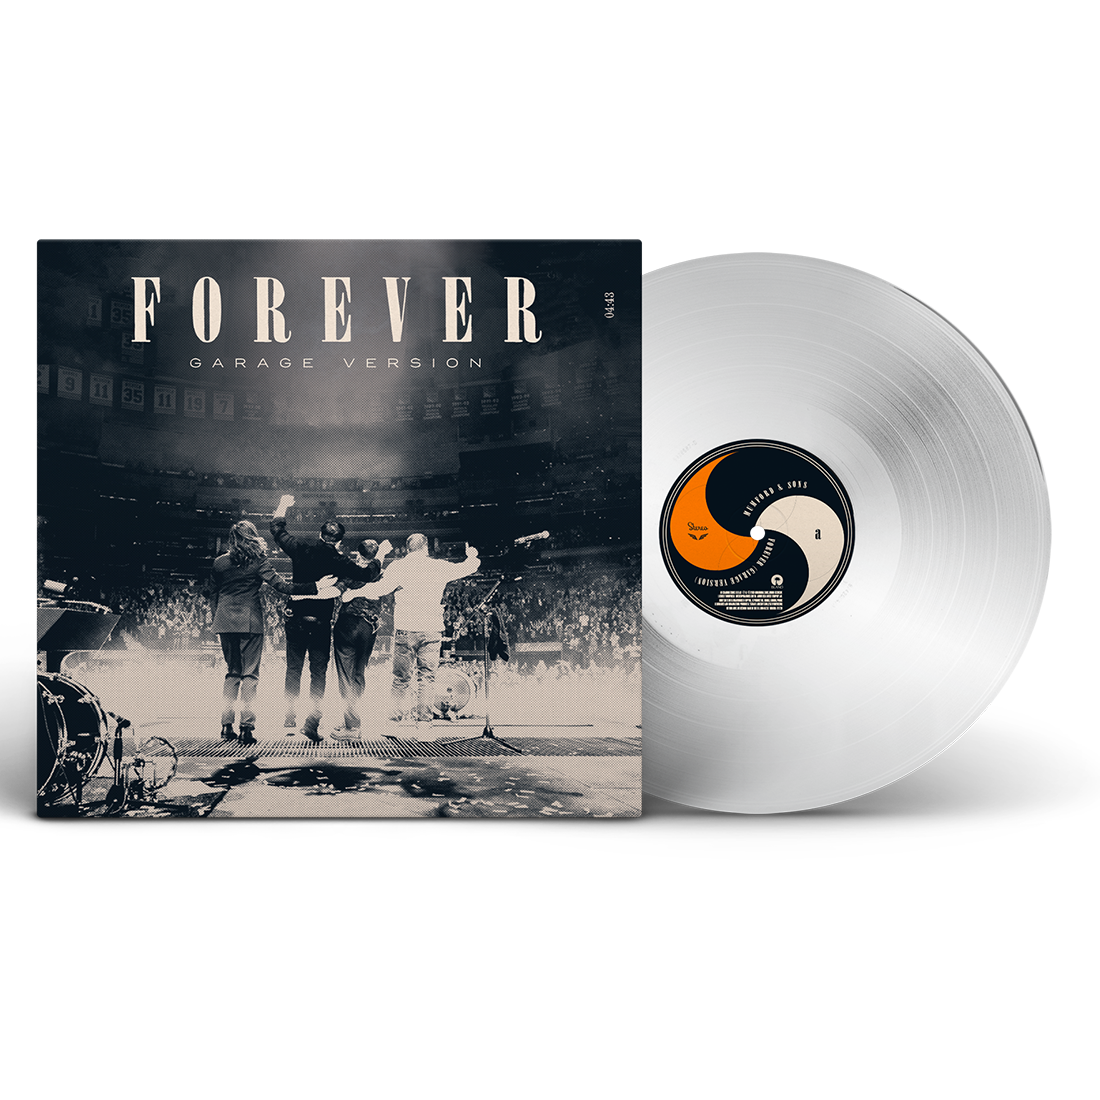 Forever (Garage Version) Limited Edition 7” White Vinyl